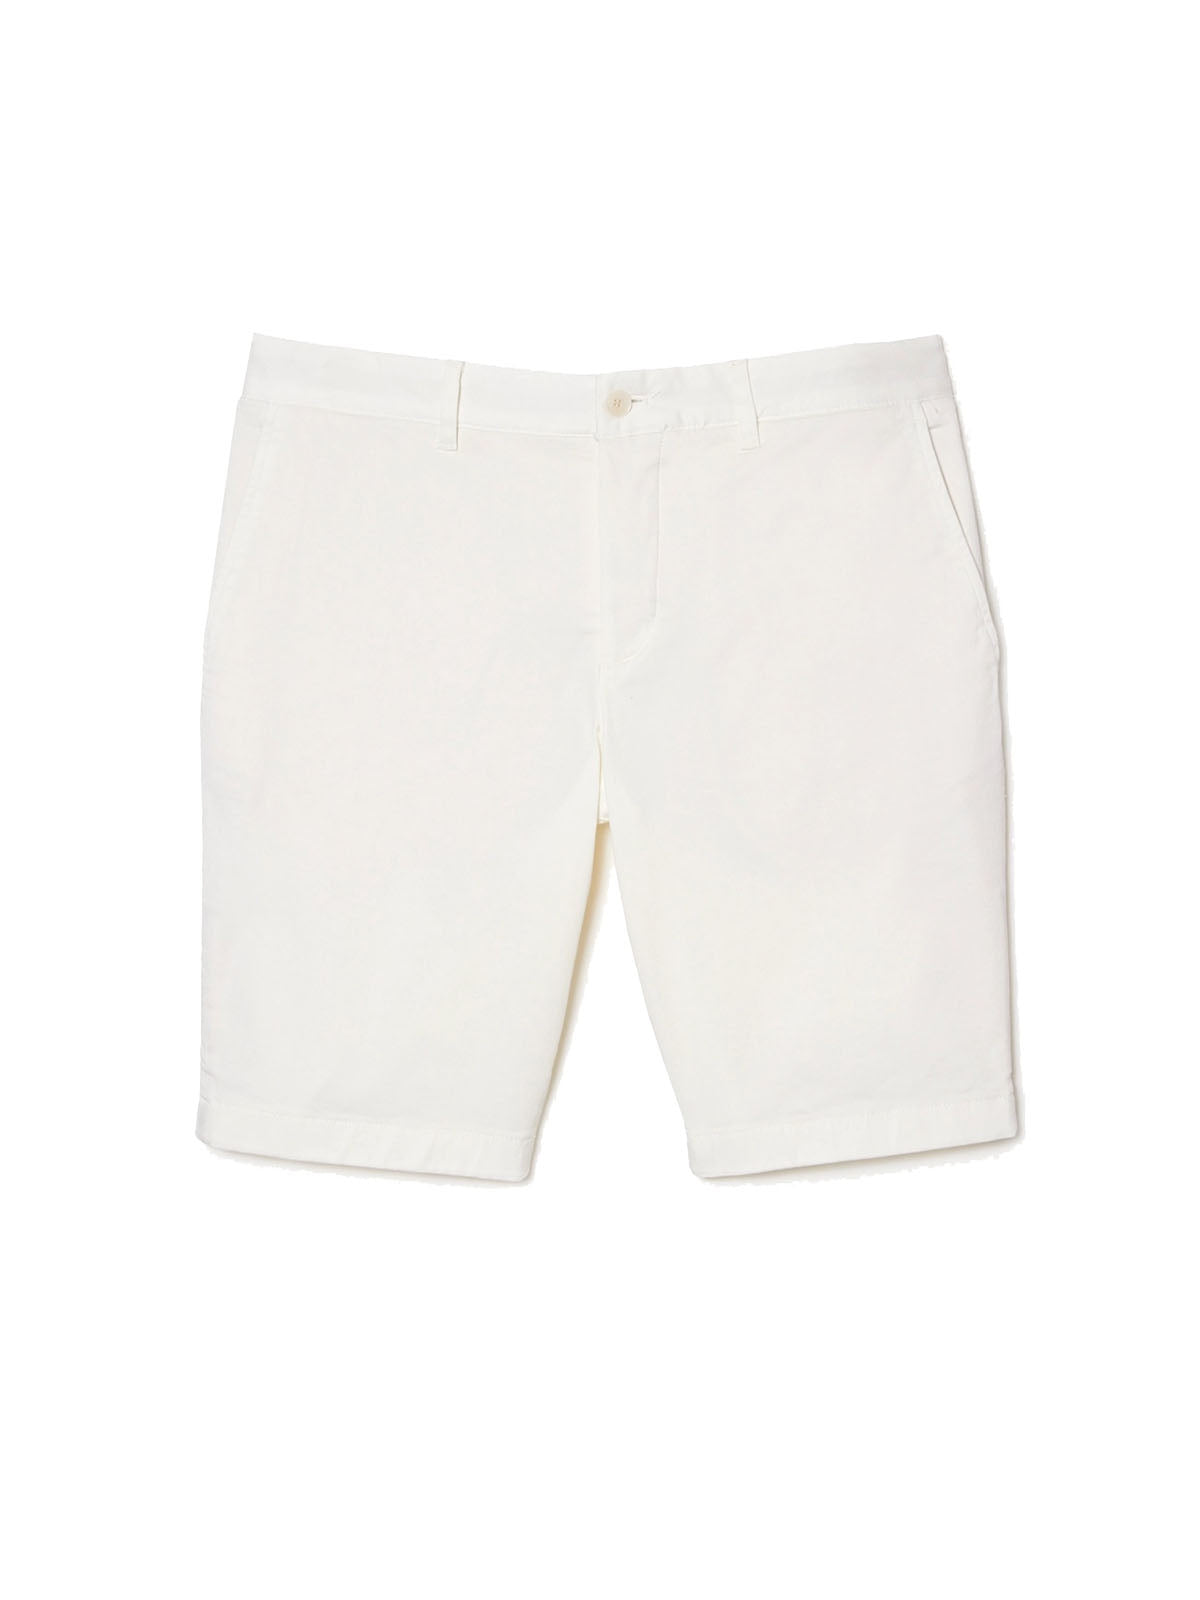 Bermuda Uomo Lacoste - Bermuda Da Uomo Slim Fit In Cotone Stretch - Bianco